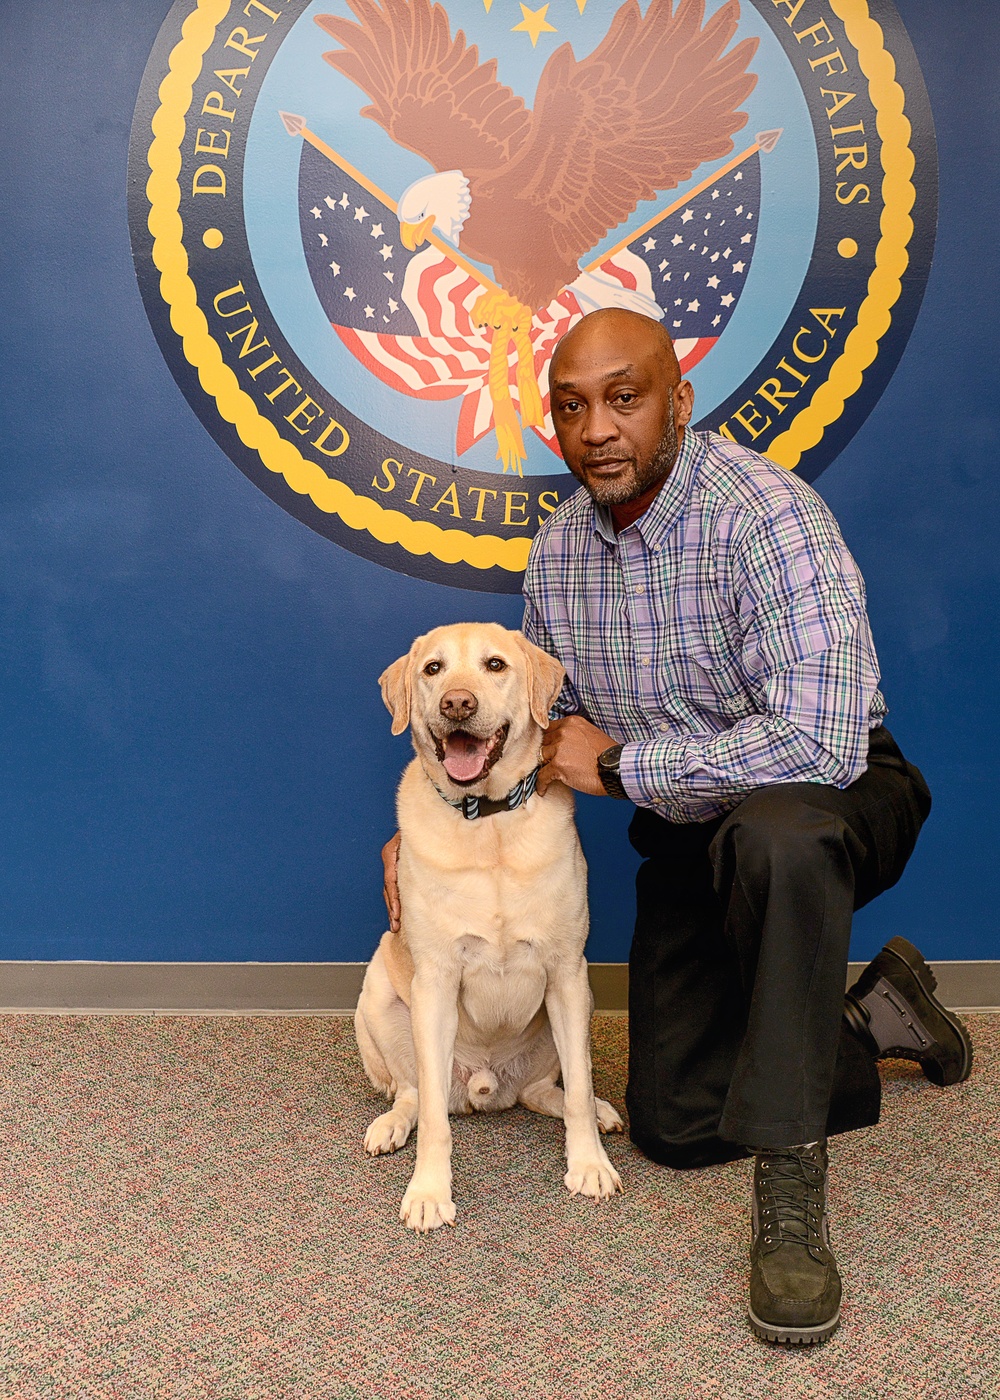 VA restarting study on service dogs and PTSD